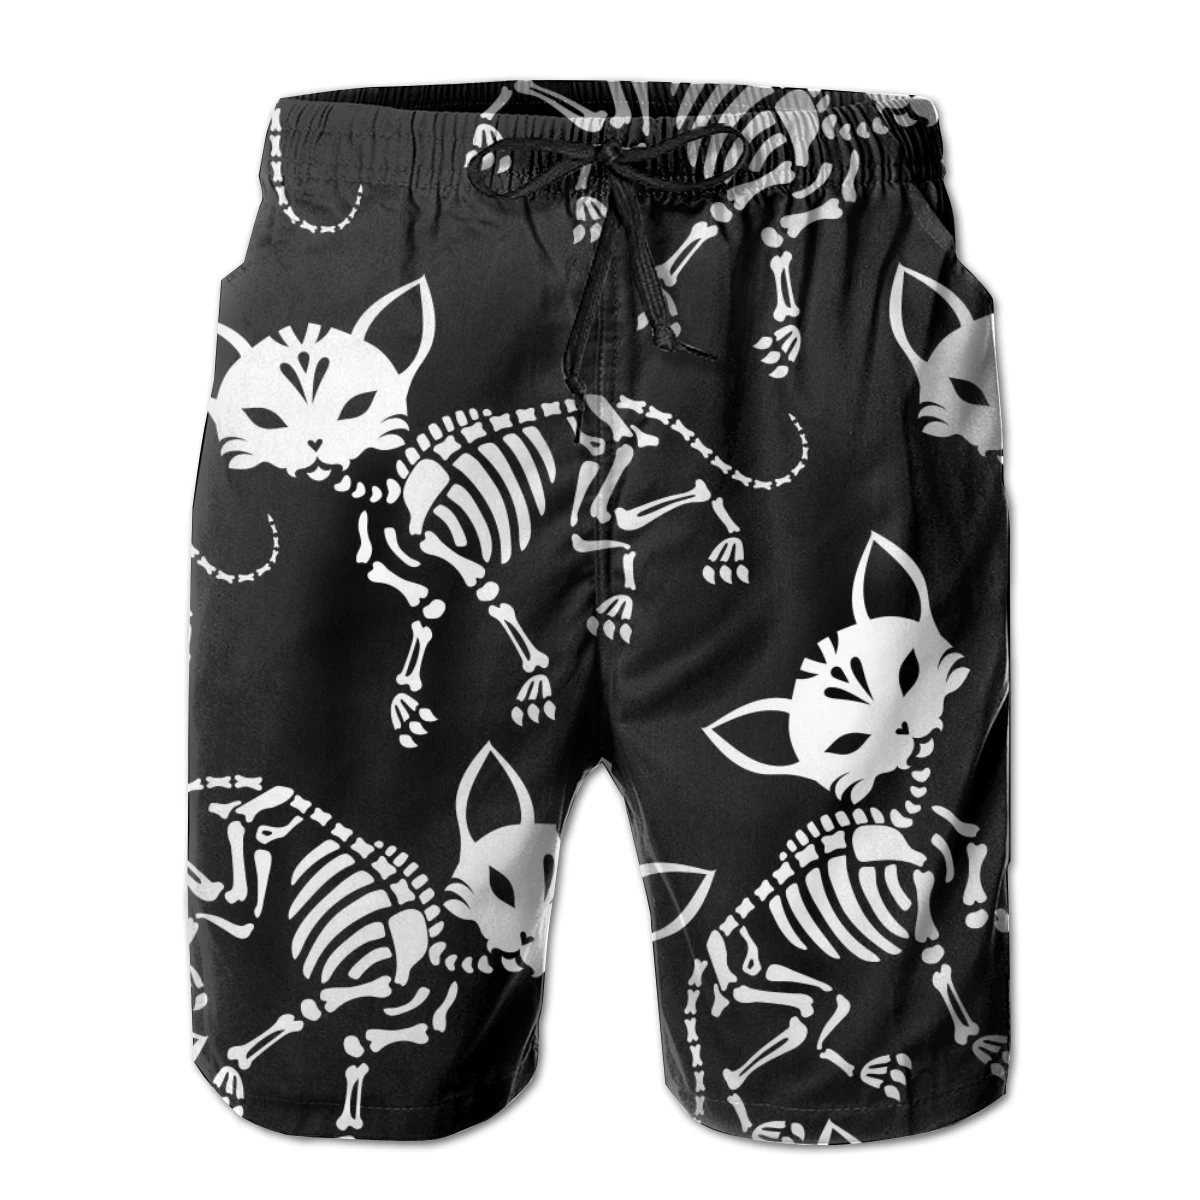 

Mens Swimming Shorts Swimwear Cute Skeletons Cats Day Of The Dead Trunks Swimsuit Man Beach Wear Short Pants Bermuda Boardshorts